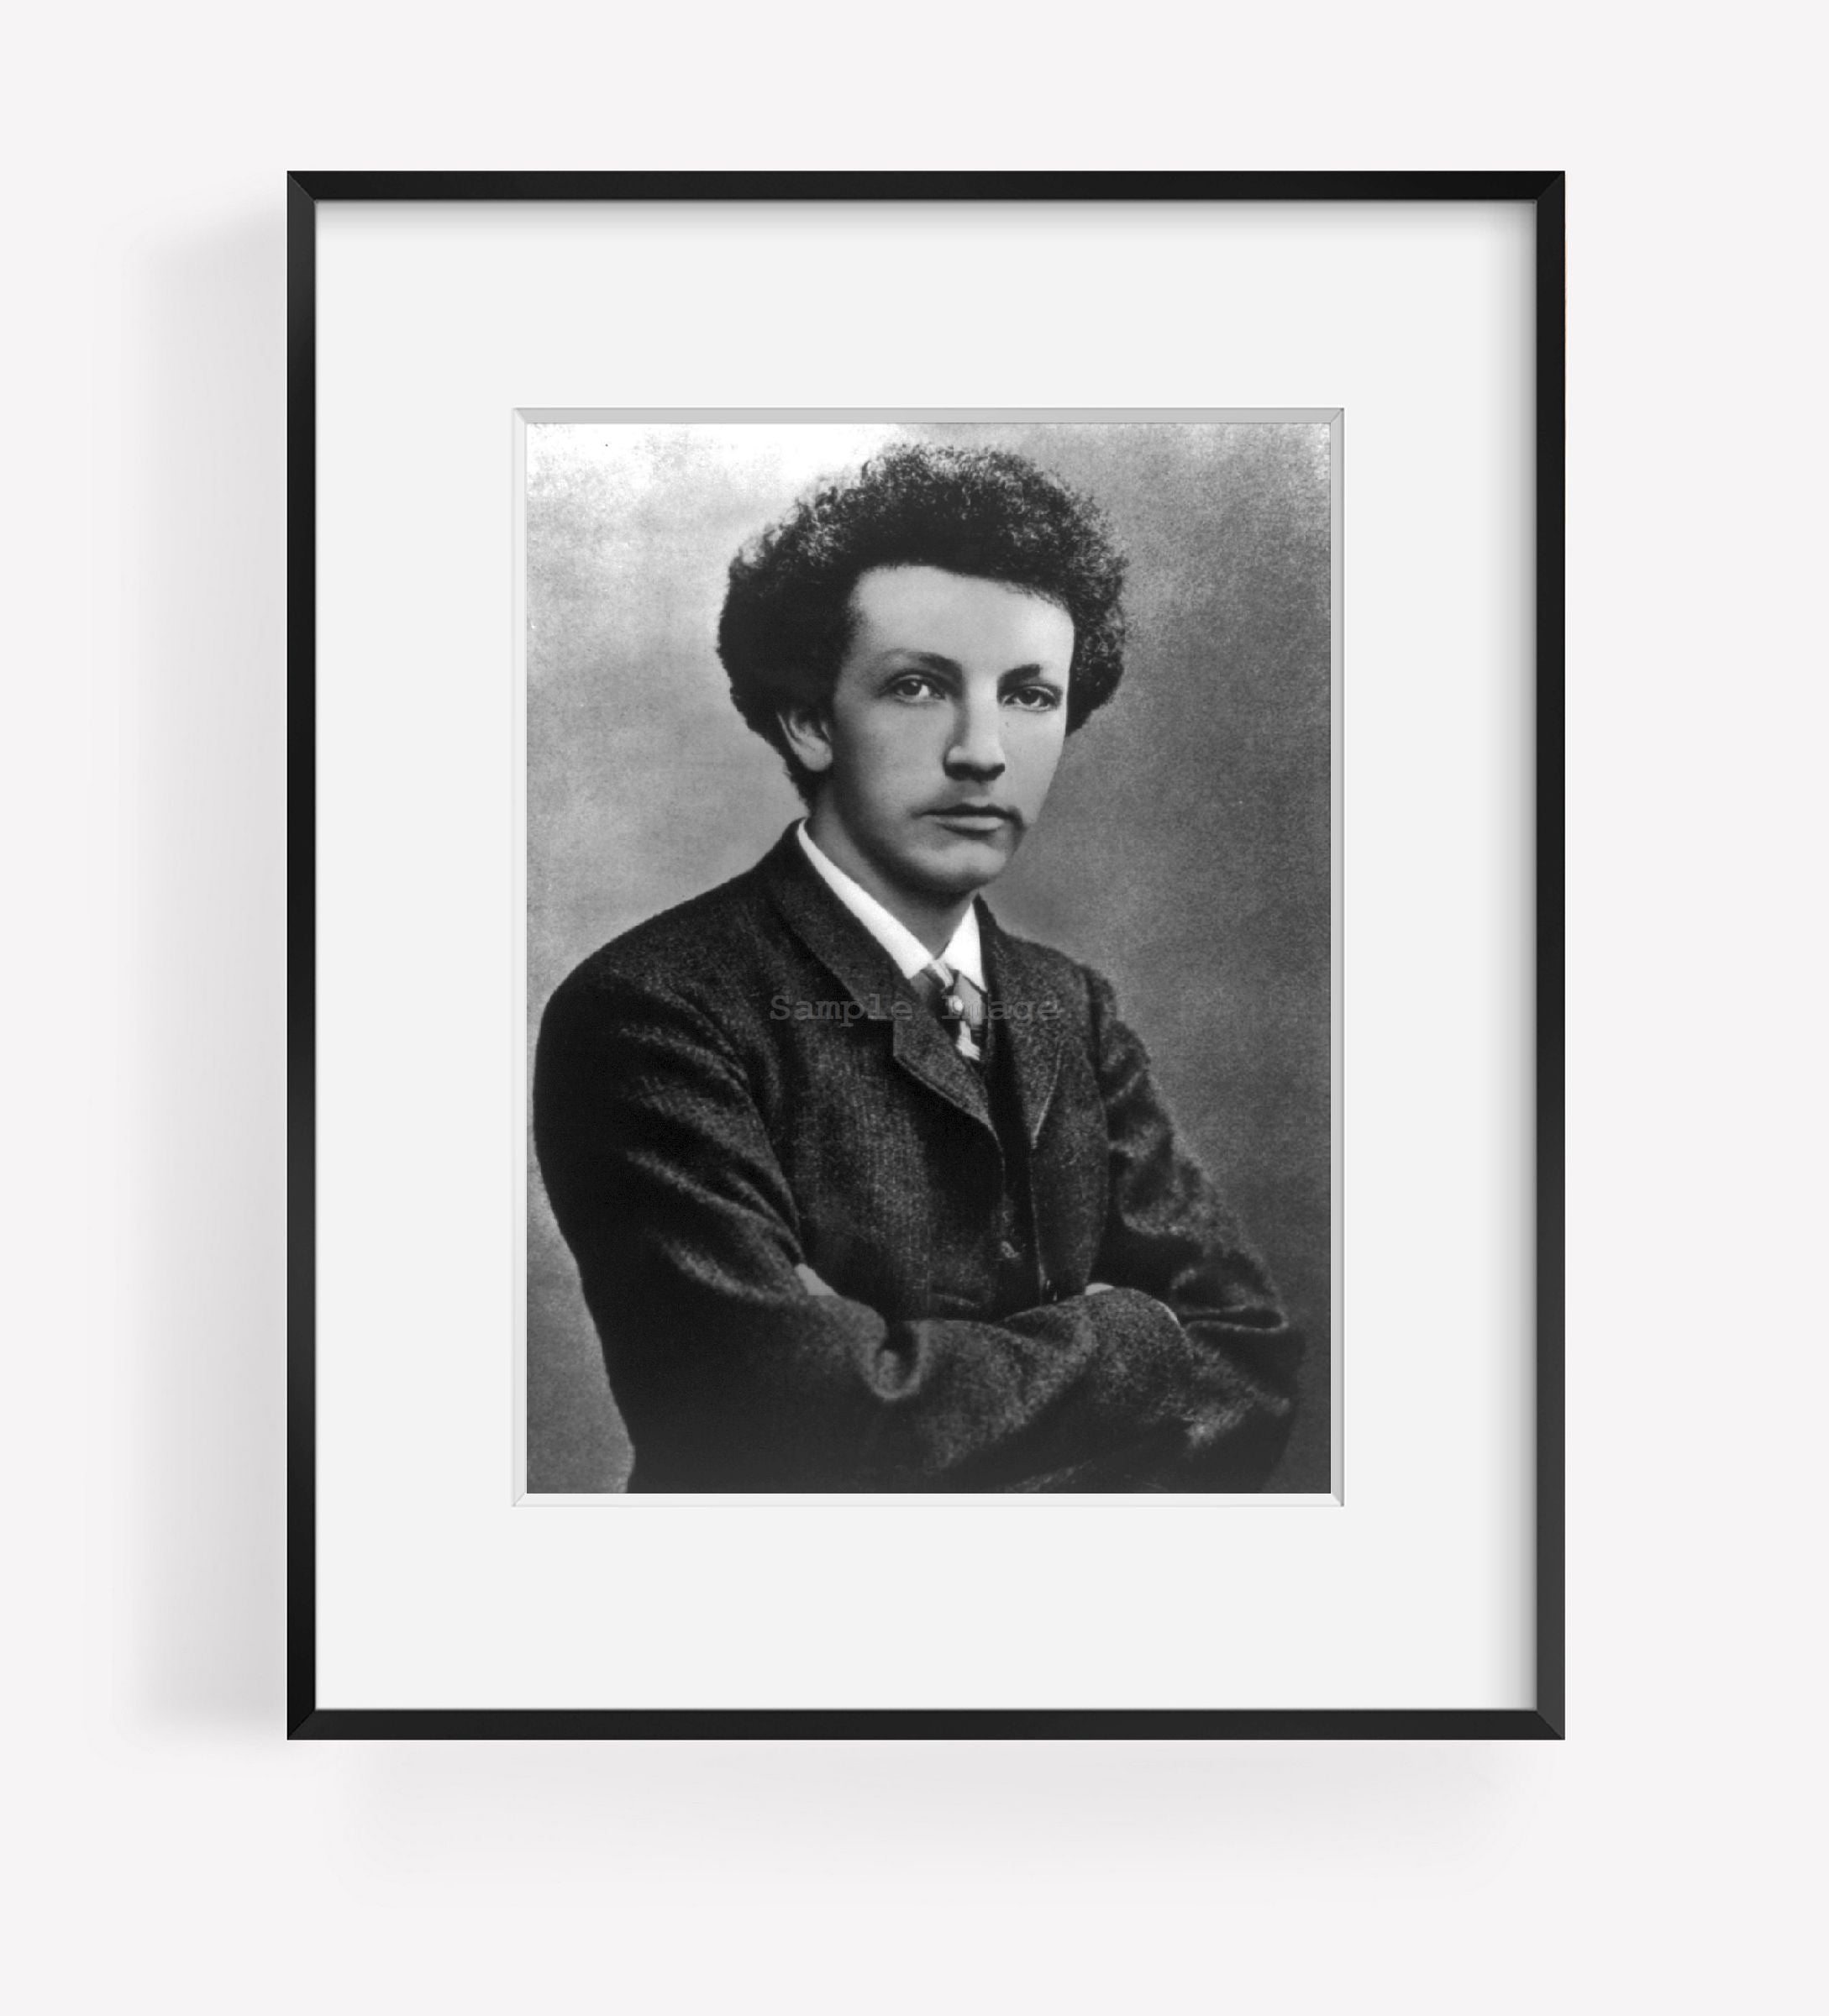 Photo: Richard George Strauss, age 24, 1864-1949, composer